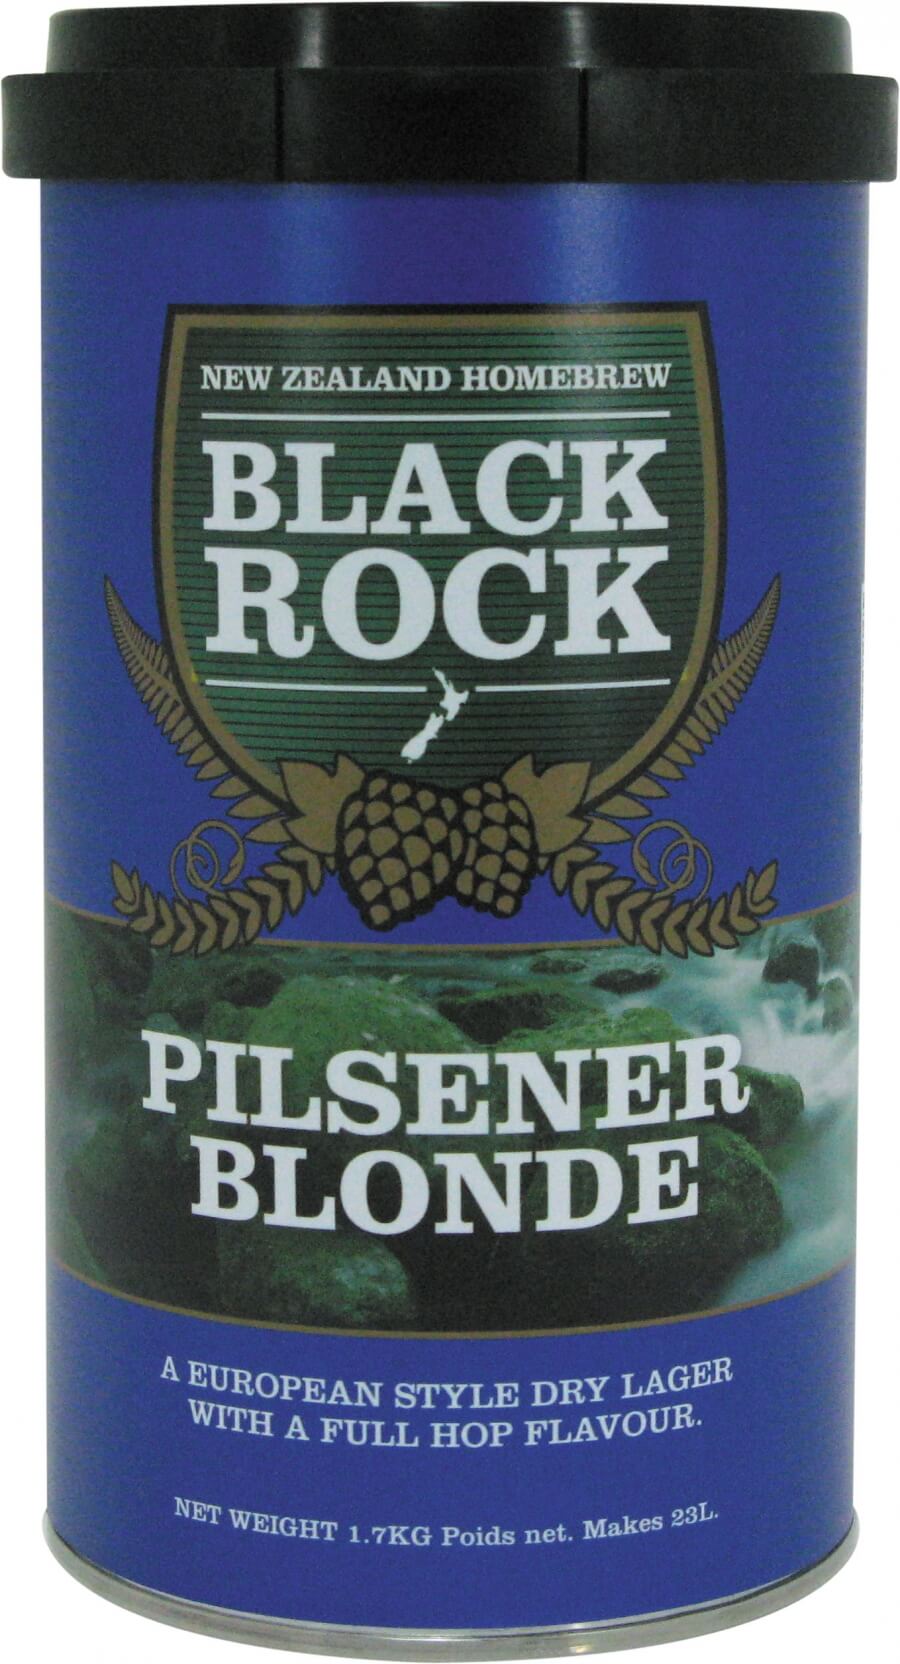 Black Rock Pilsner Blonde Beerkit 1.7kg